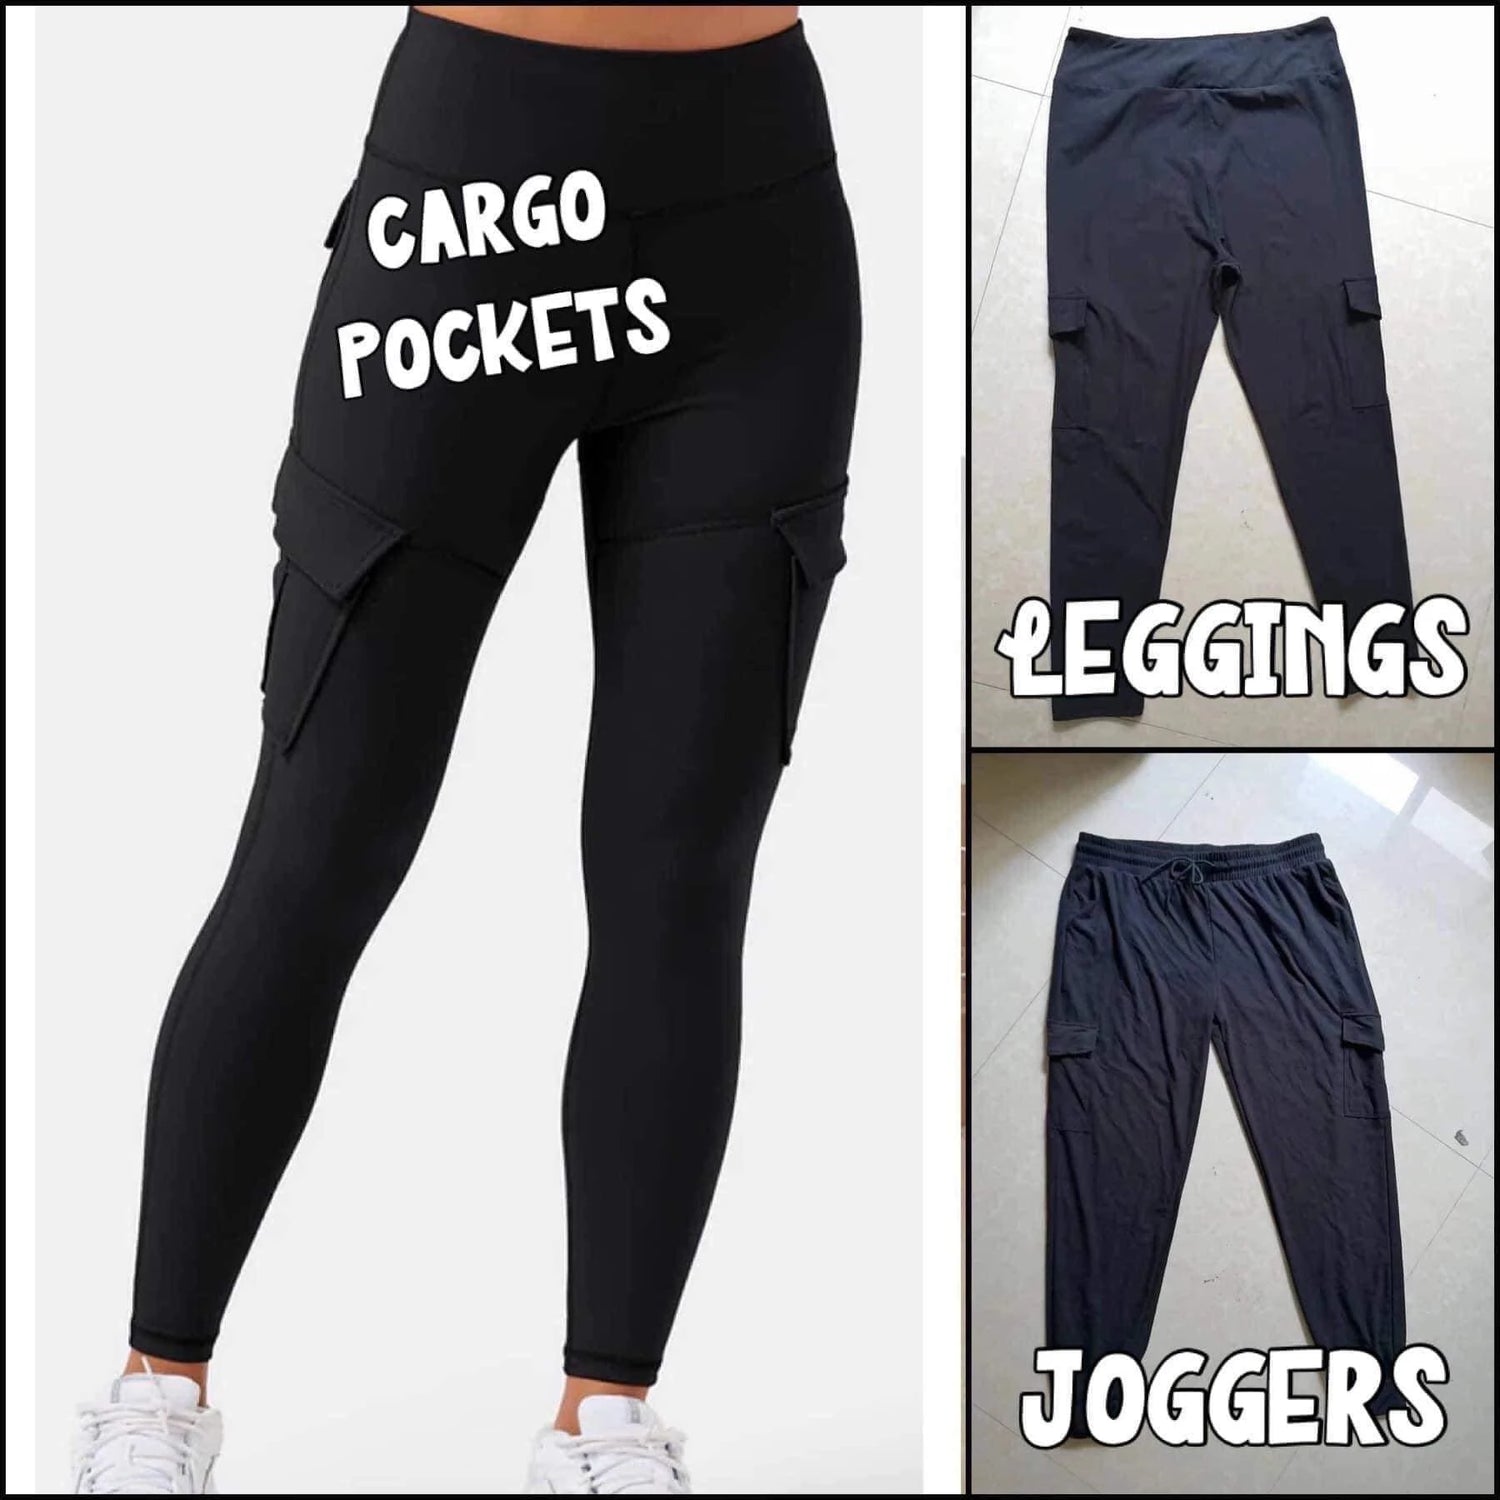 Cargo Pocket Leggings & Joggers 4